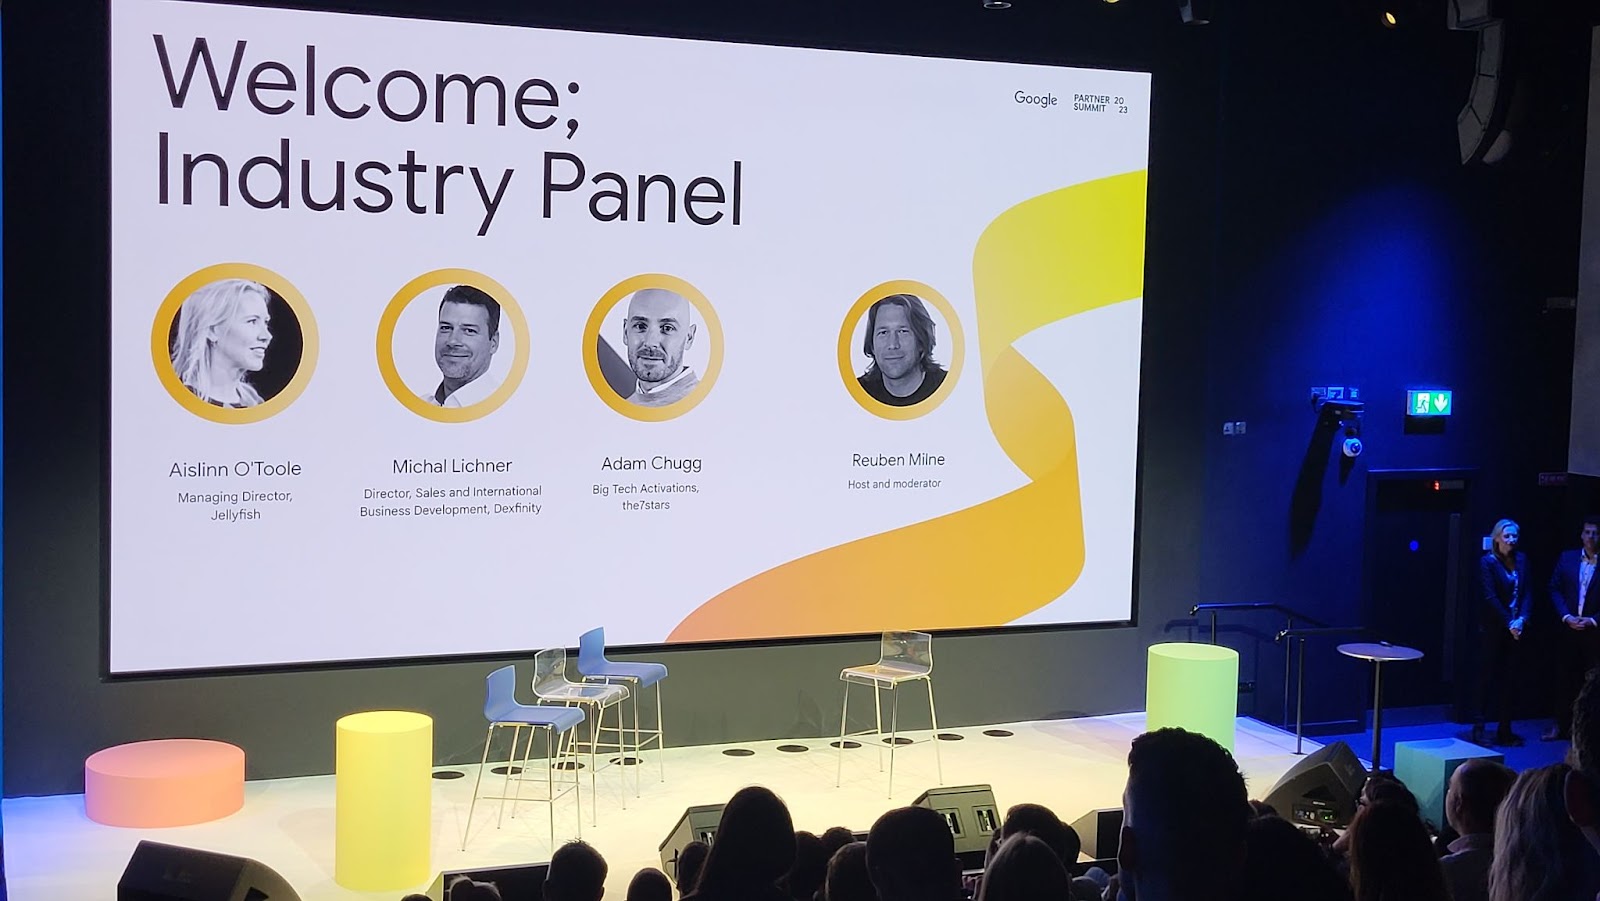 google partner summit - industry panel